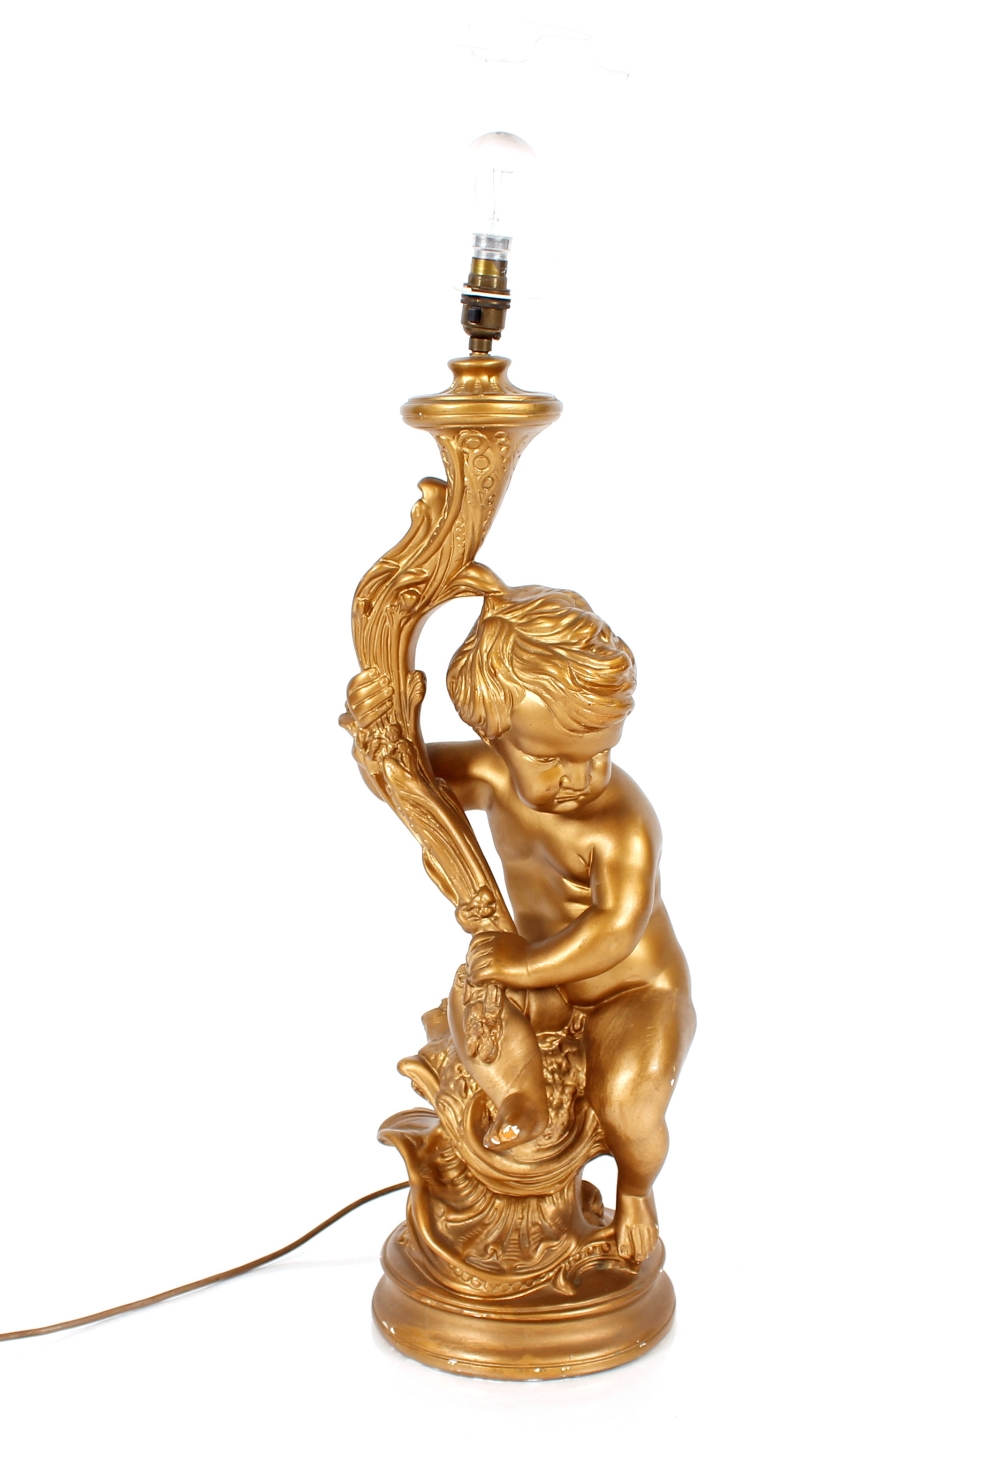 A decorative gilt cherub lamp, 69cm high